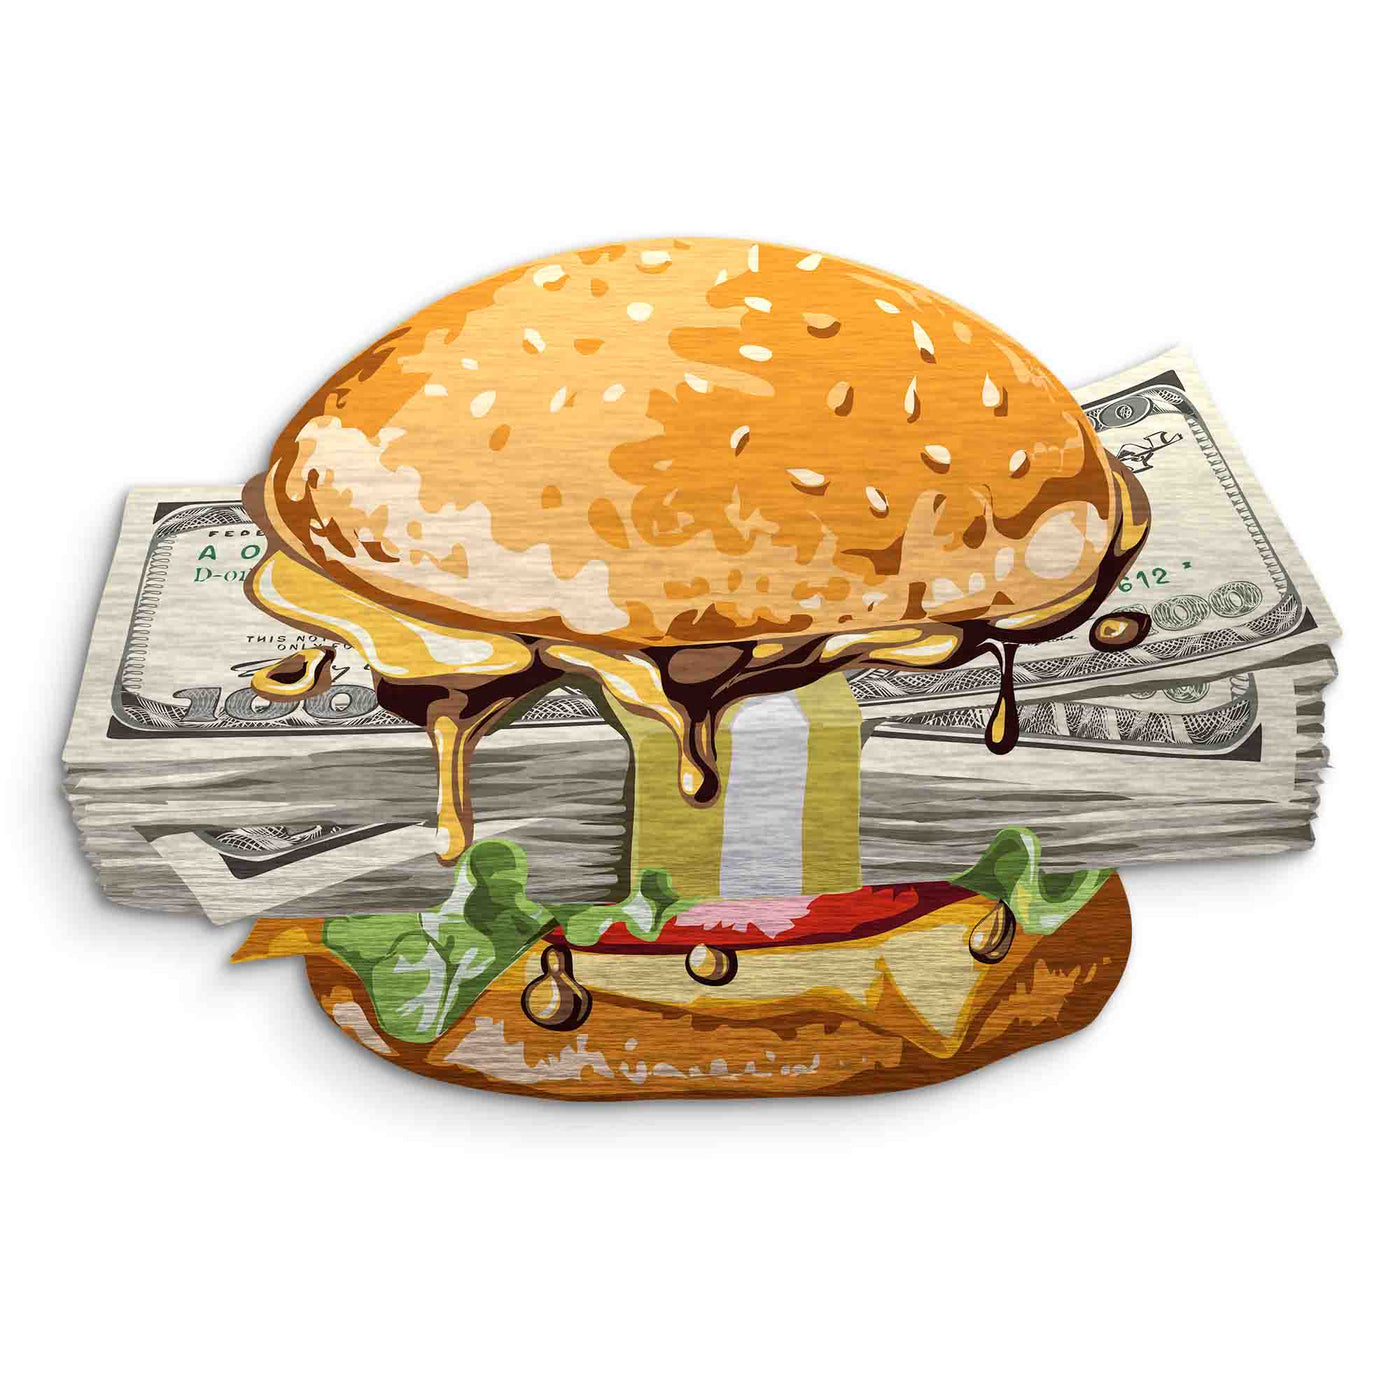 Cash Burger